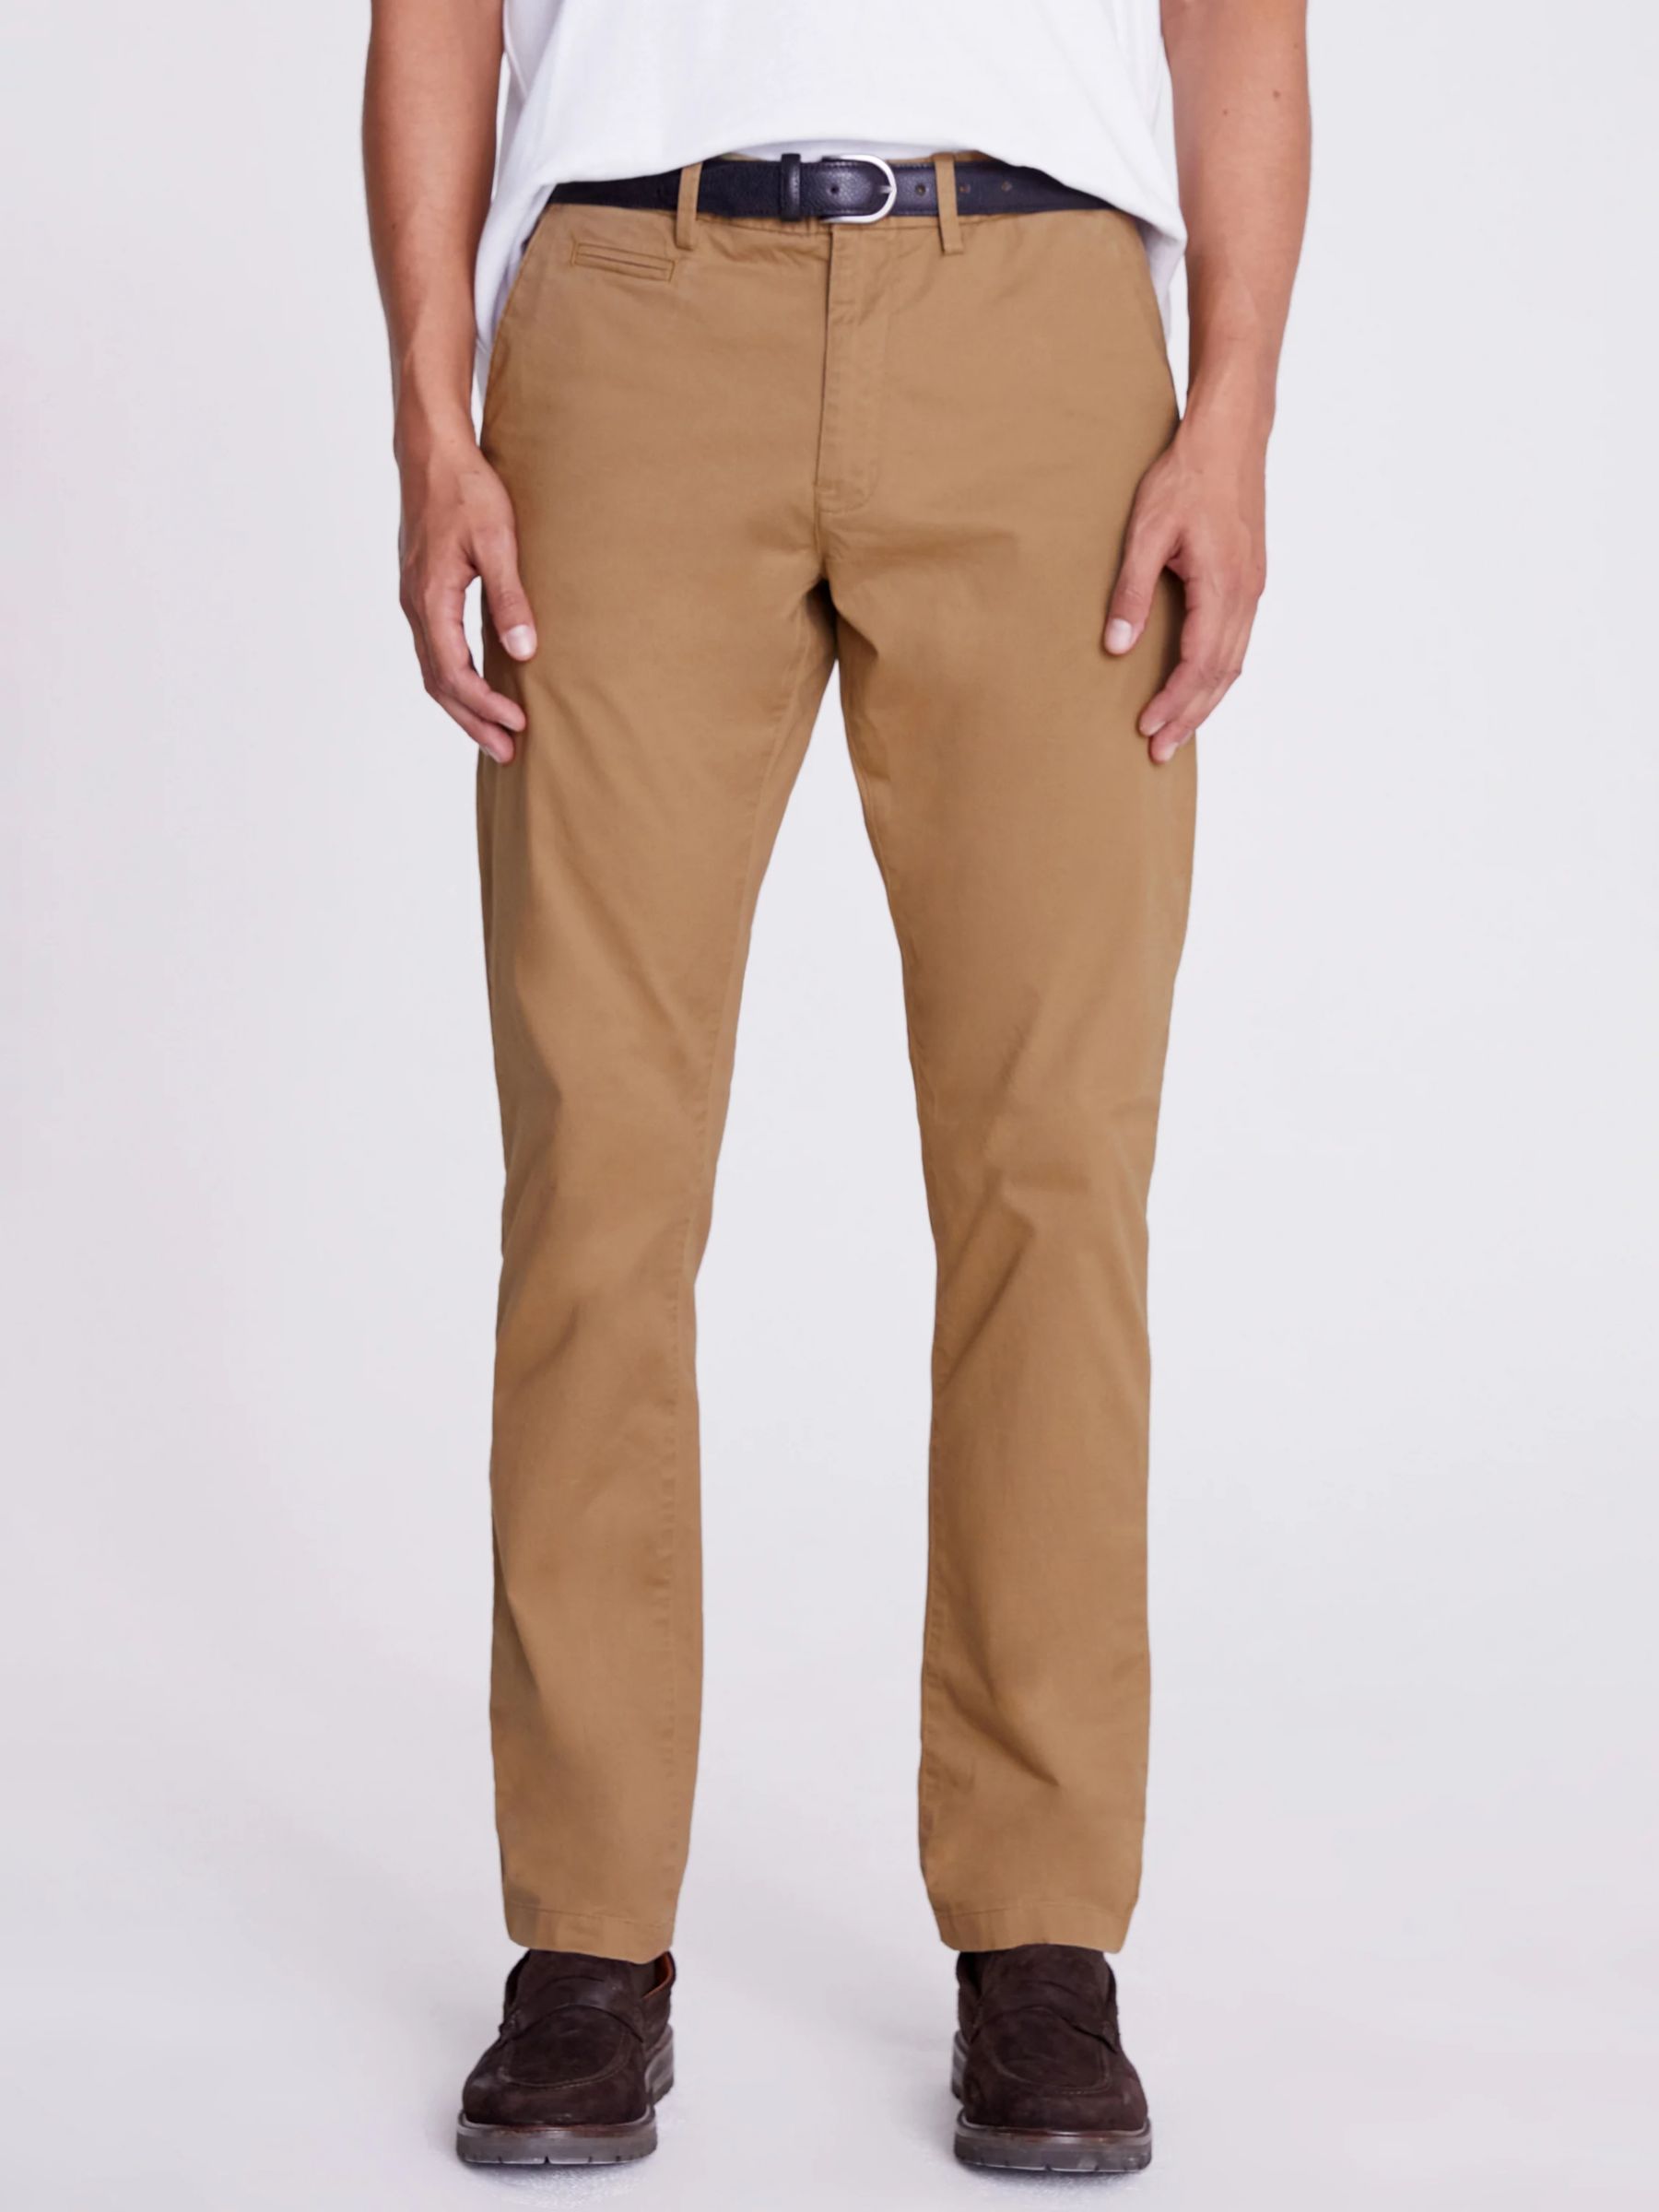 Ralph Lauren Women's Slim Fit Stretch Chino Pants Brown Size 16